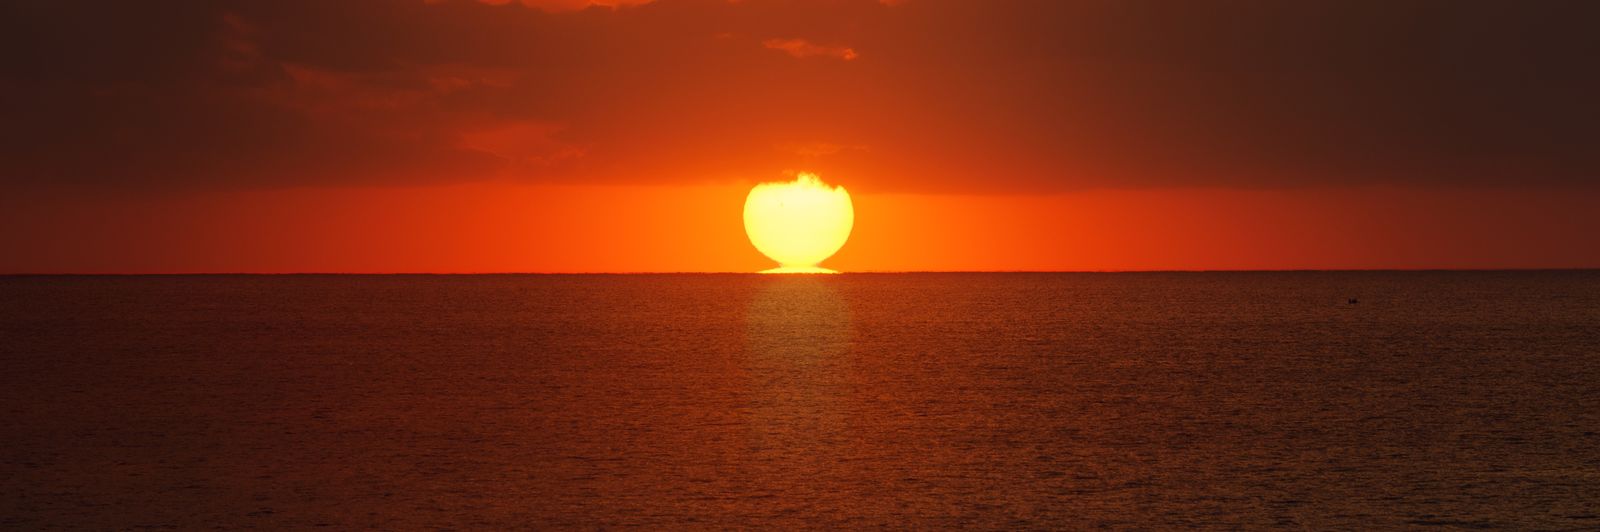 Sunrise and Sunset - The Flat Earth Wiki